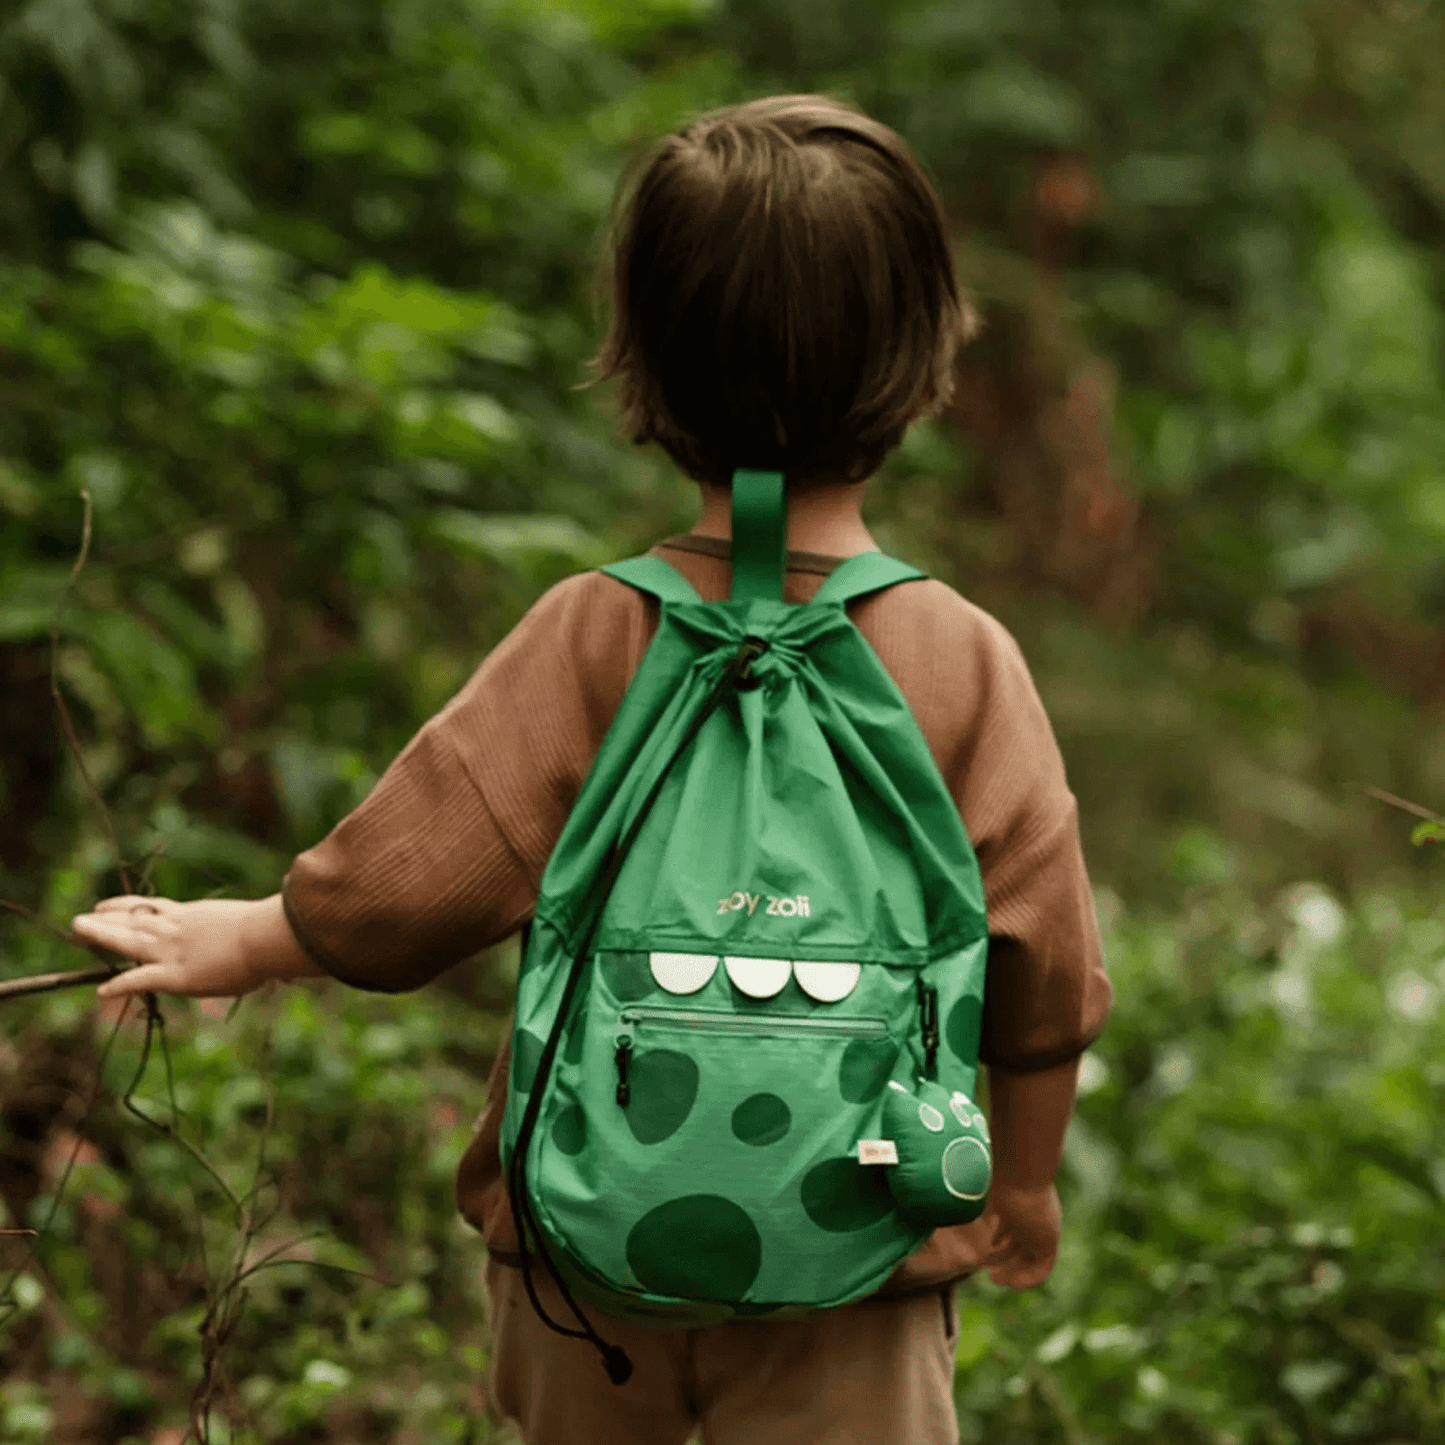 ZOYZOII outdoor drawstring bag for Kids